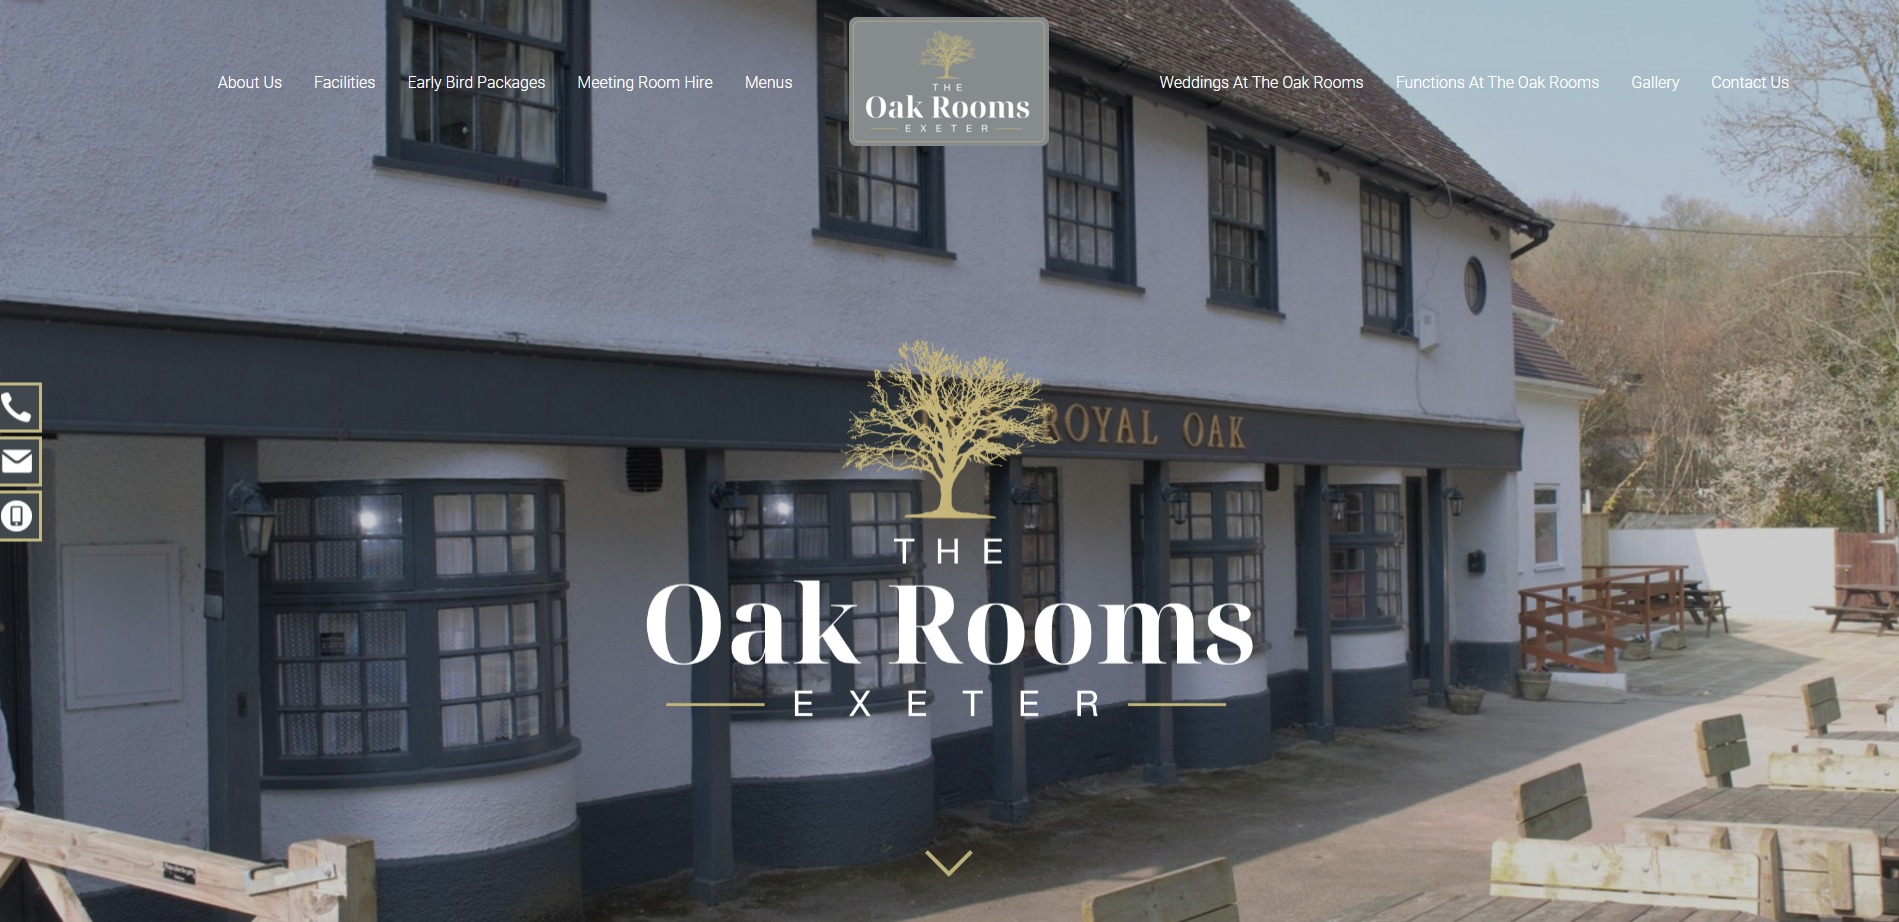 The Oak Rooms - Exeter public house